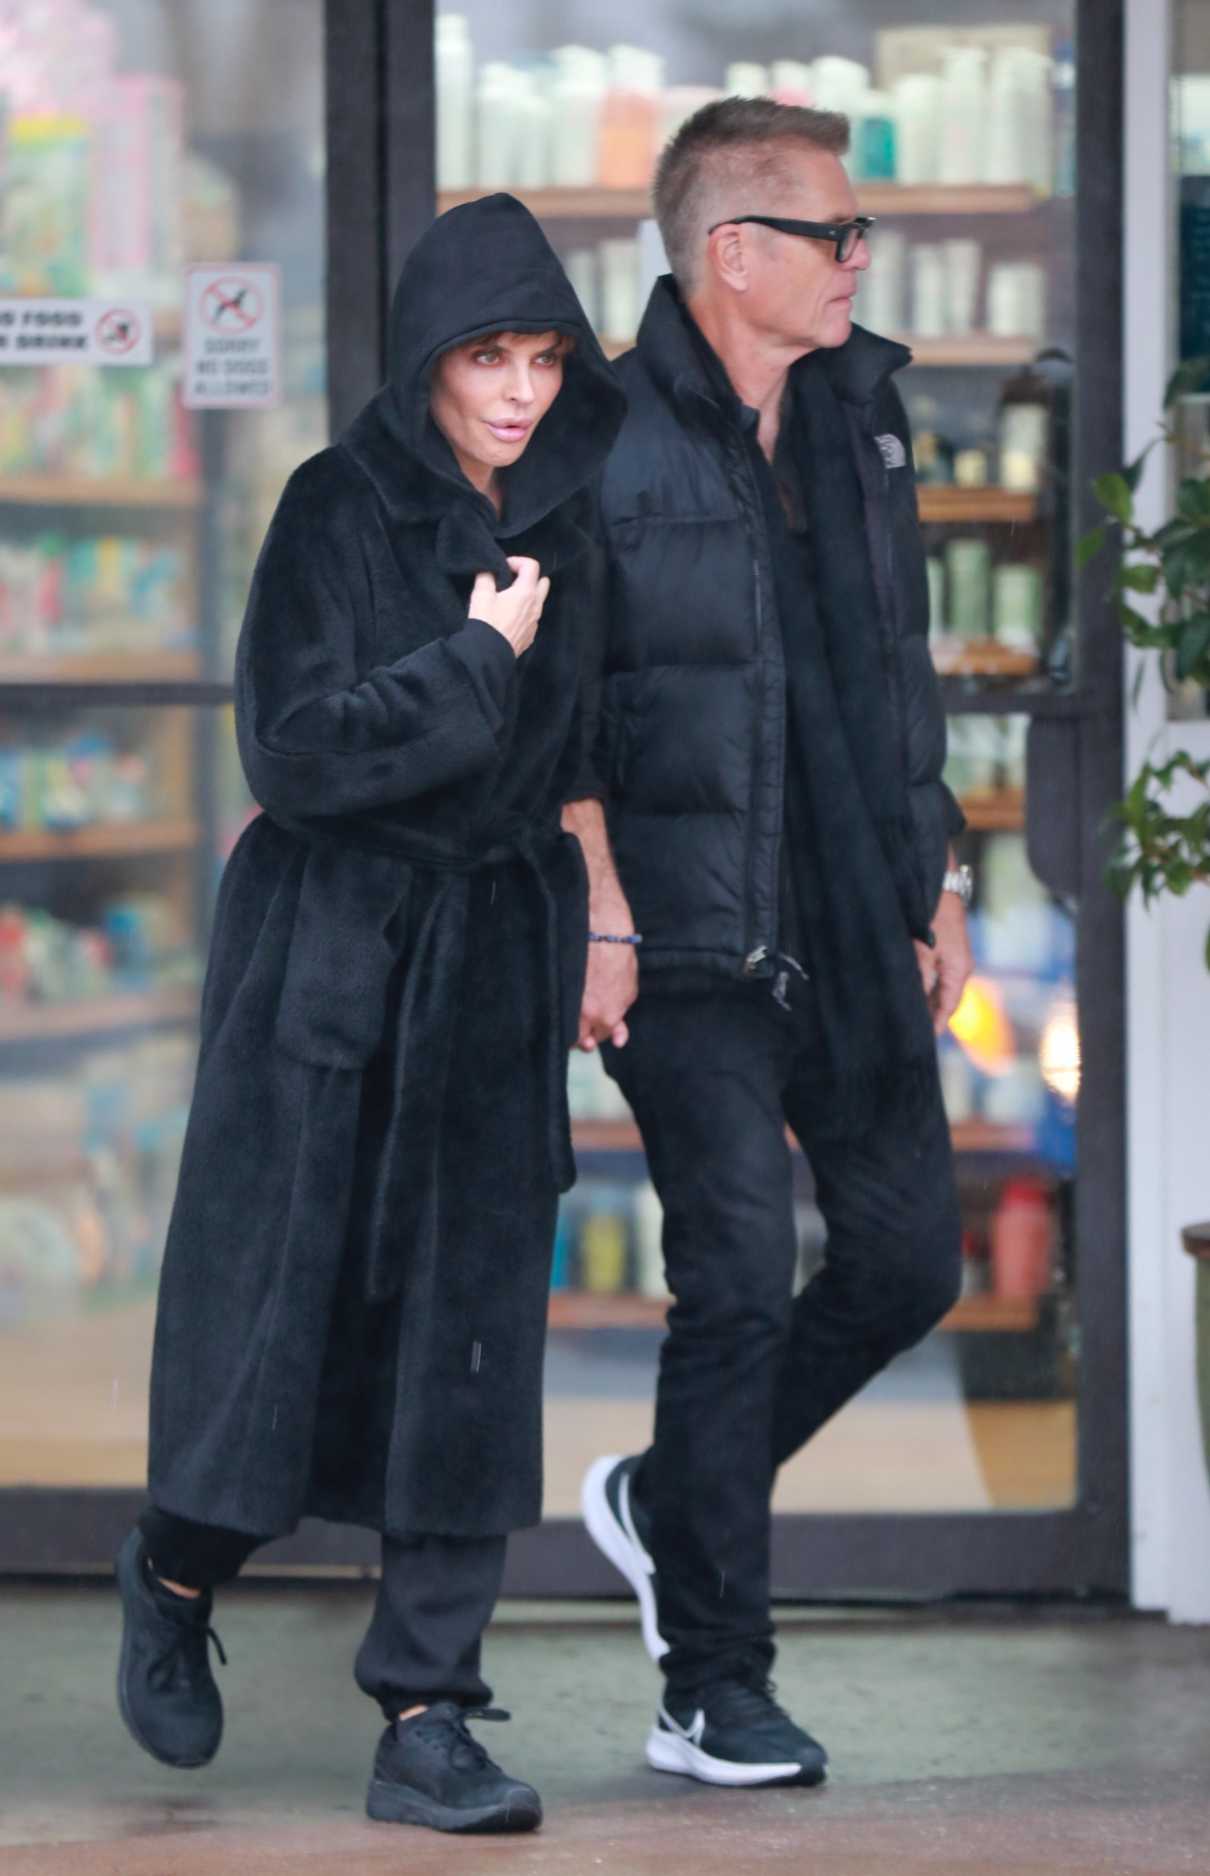 Lisa Rinna in a Black Fur Coat